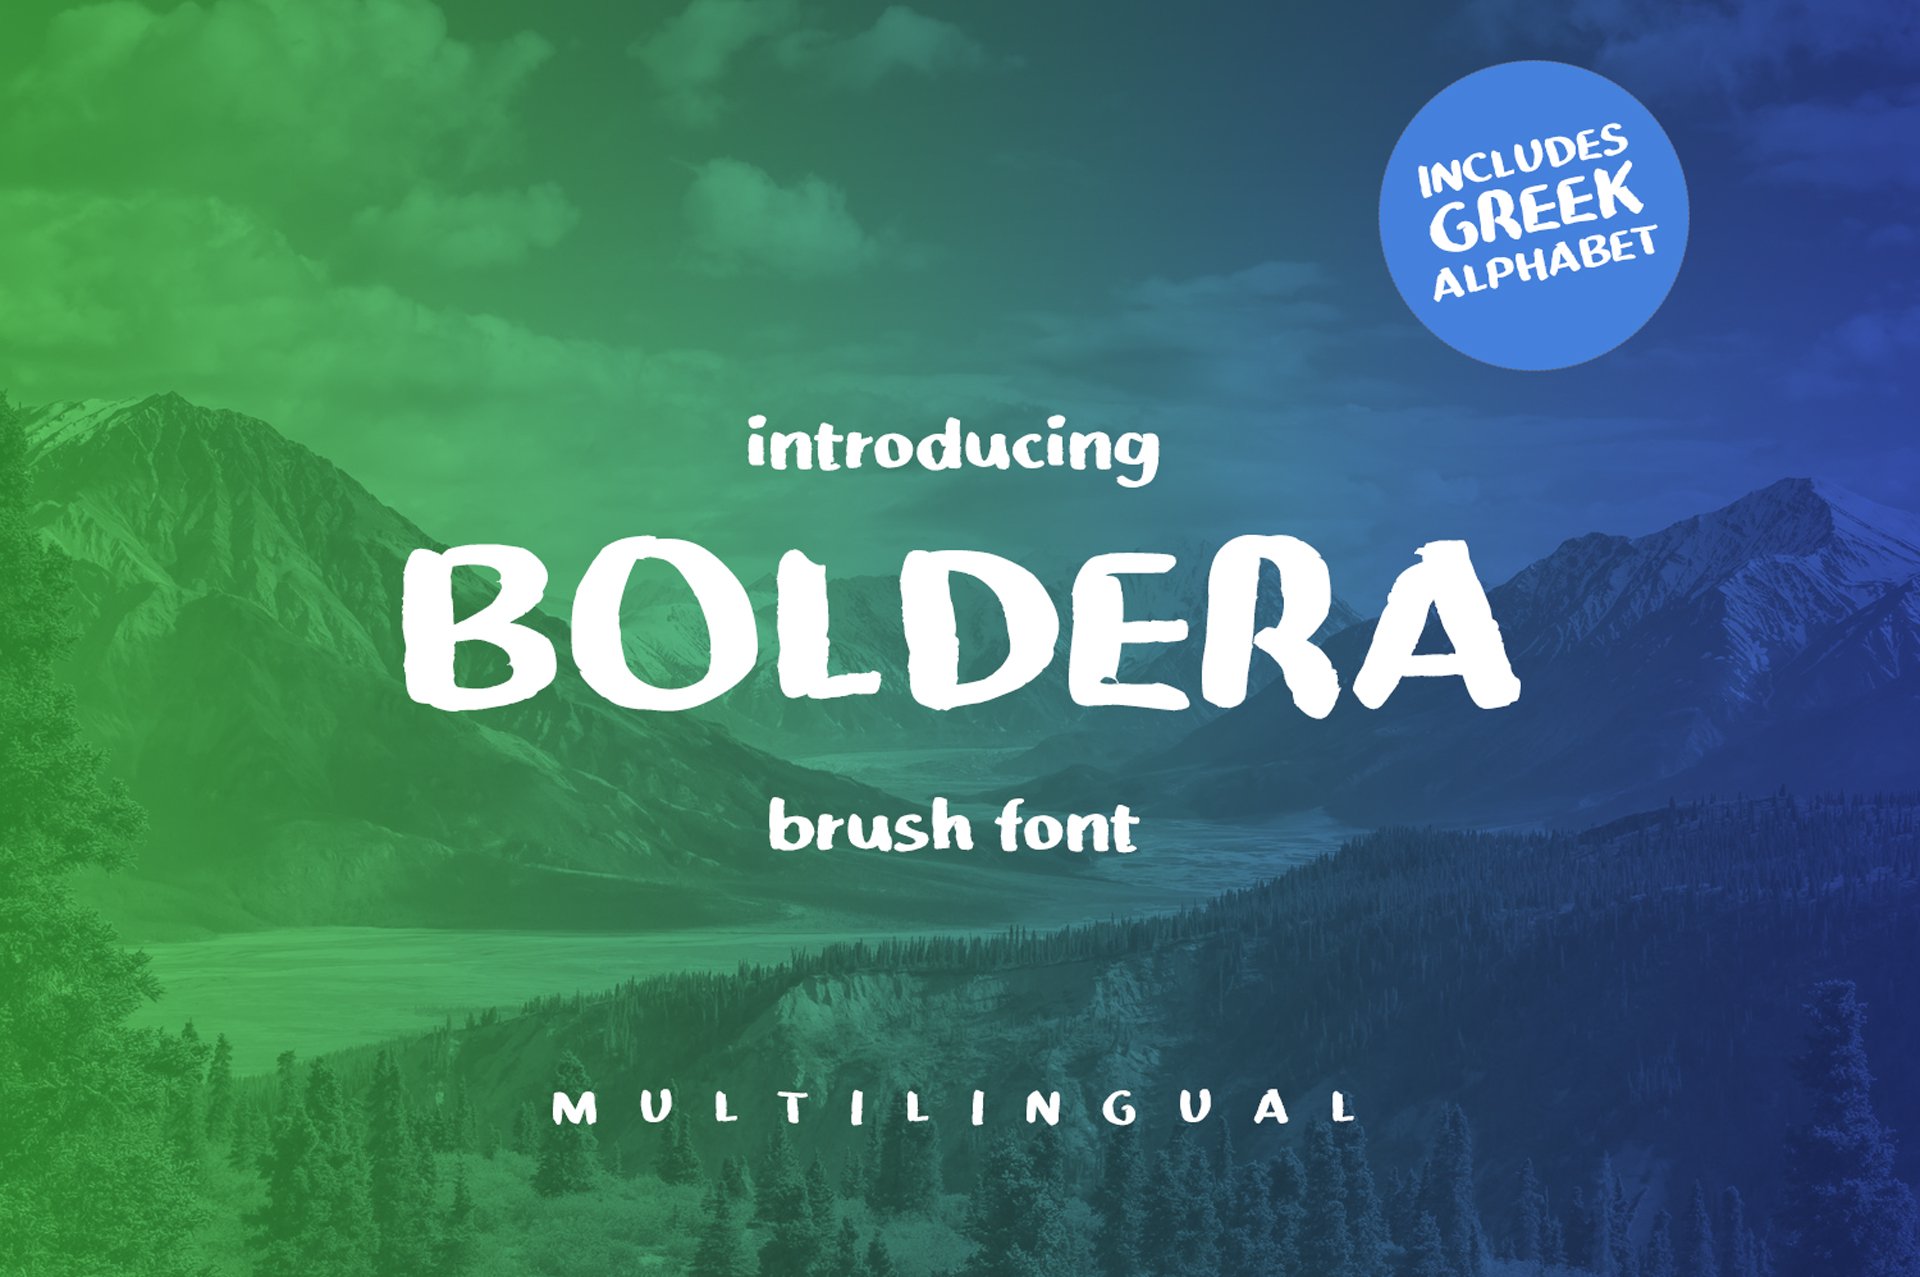 Boldera brush font cover image.